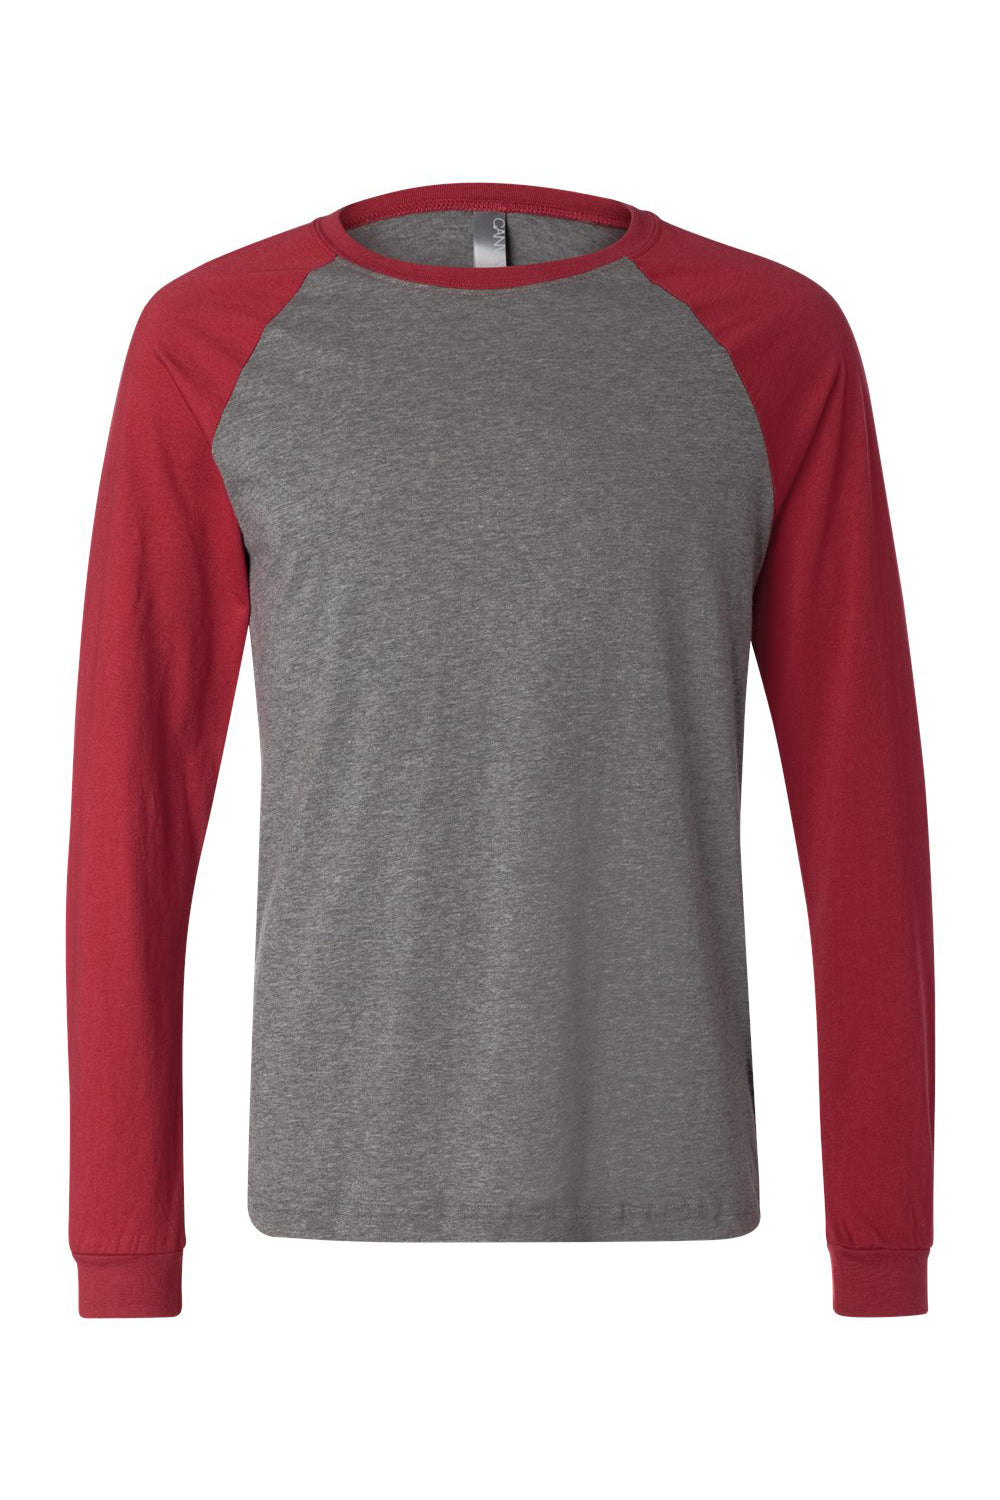 Bella + Canvas 3000C/3000 Mens Jersey Long Sleeve Crewneck T-Shirt Heather Deep Grey/Cardinal Red Flat Front